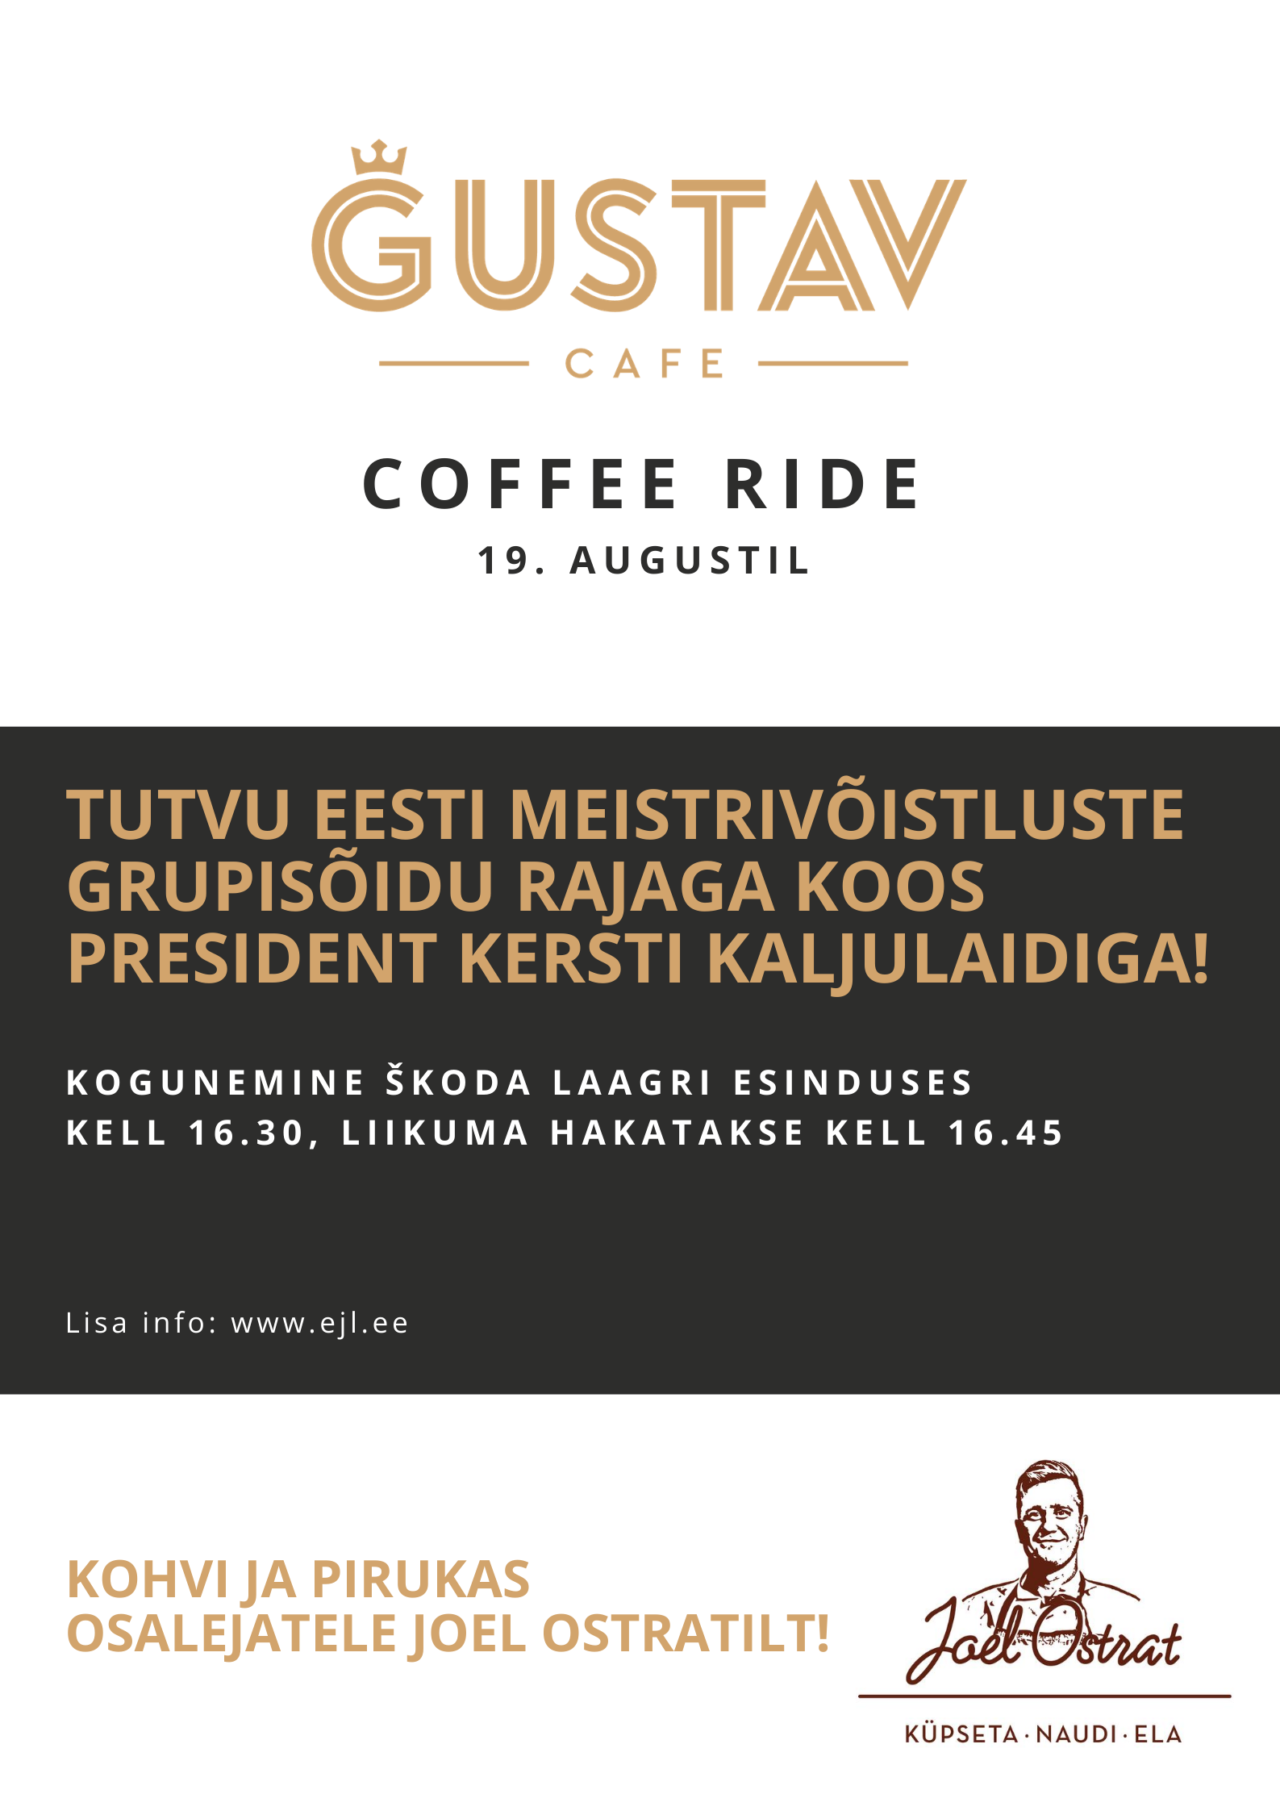 Gustav cafe coffee ride_plakat